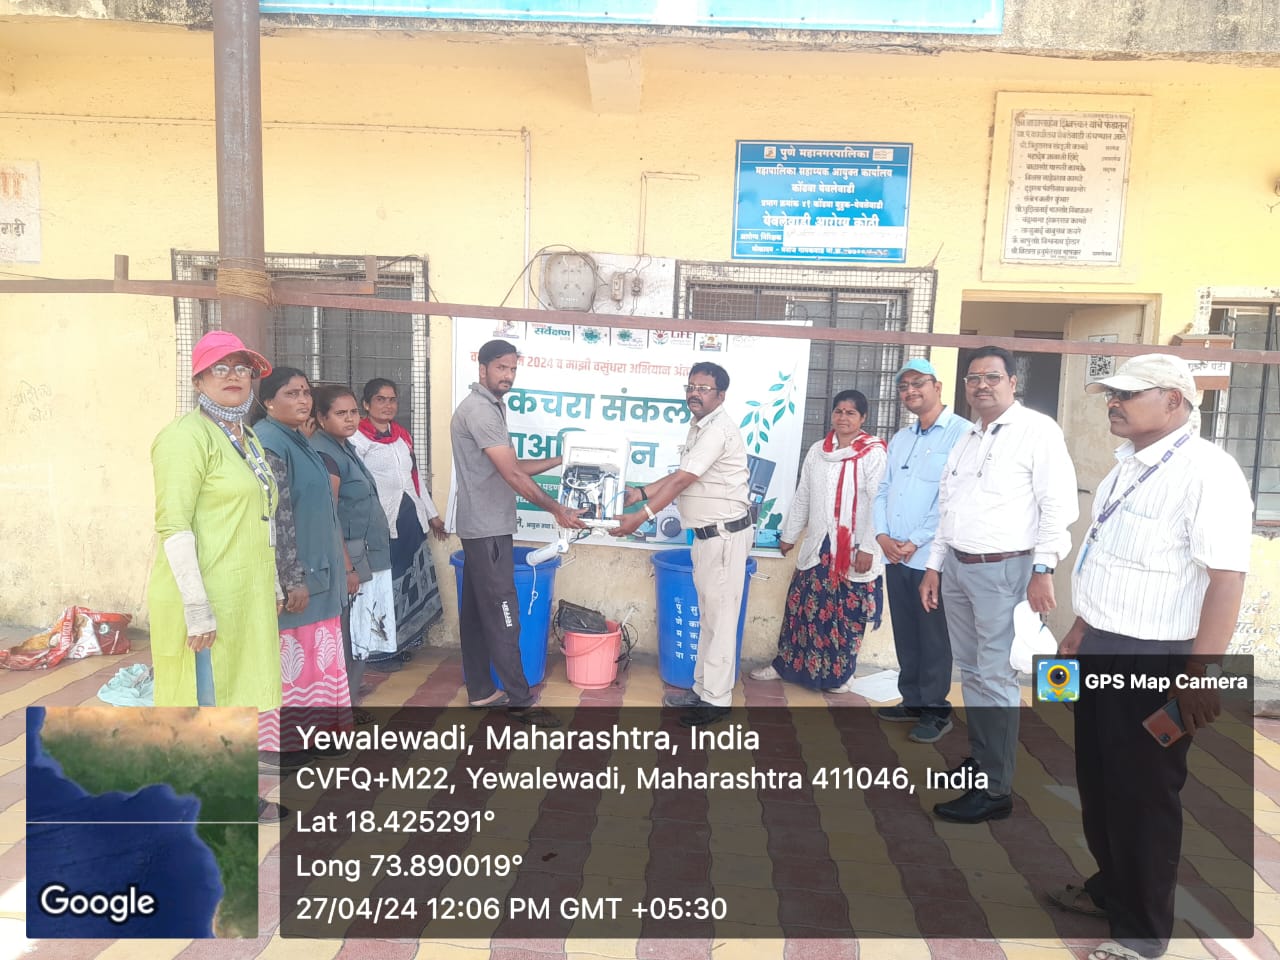 Organization of e-waste collection campaign under Majhi Vasundhara Abhiyan through Pune Municipal Corporation (PMC)